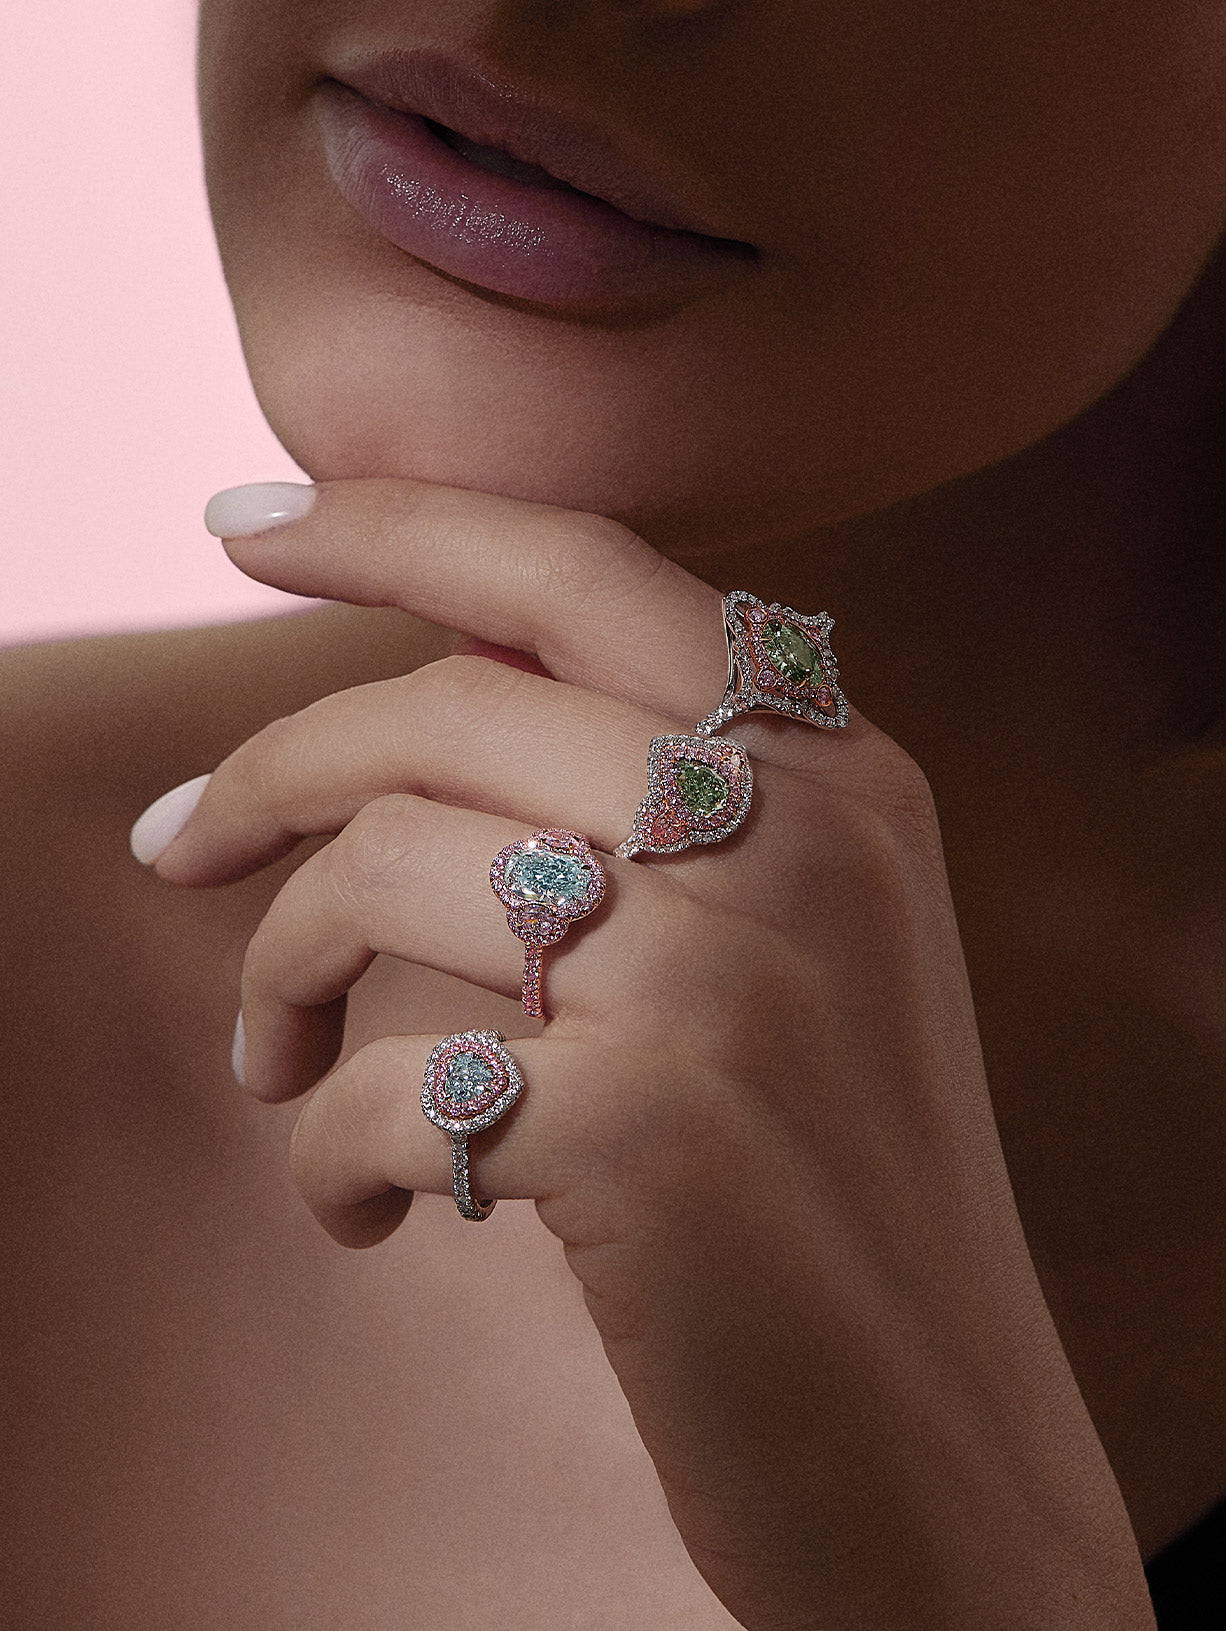 Argyle Pink™ Diamond and Heart Shape Diamond Ring - Pink Diamonds, J FINE - J Fine, Rings - Pink Diamond Jewelry, argyle-pink™-diamond-and-heart-shape-diamond-ring-by-j-fine - Argyle Pink